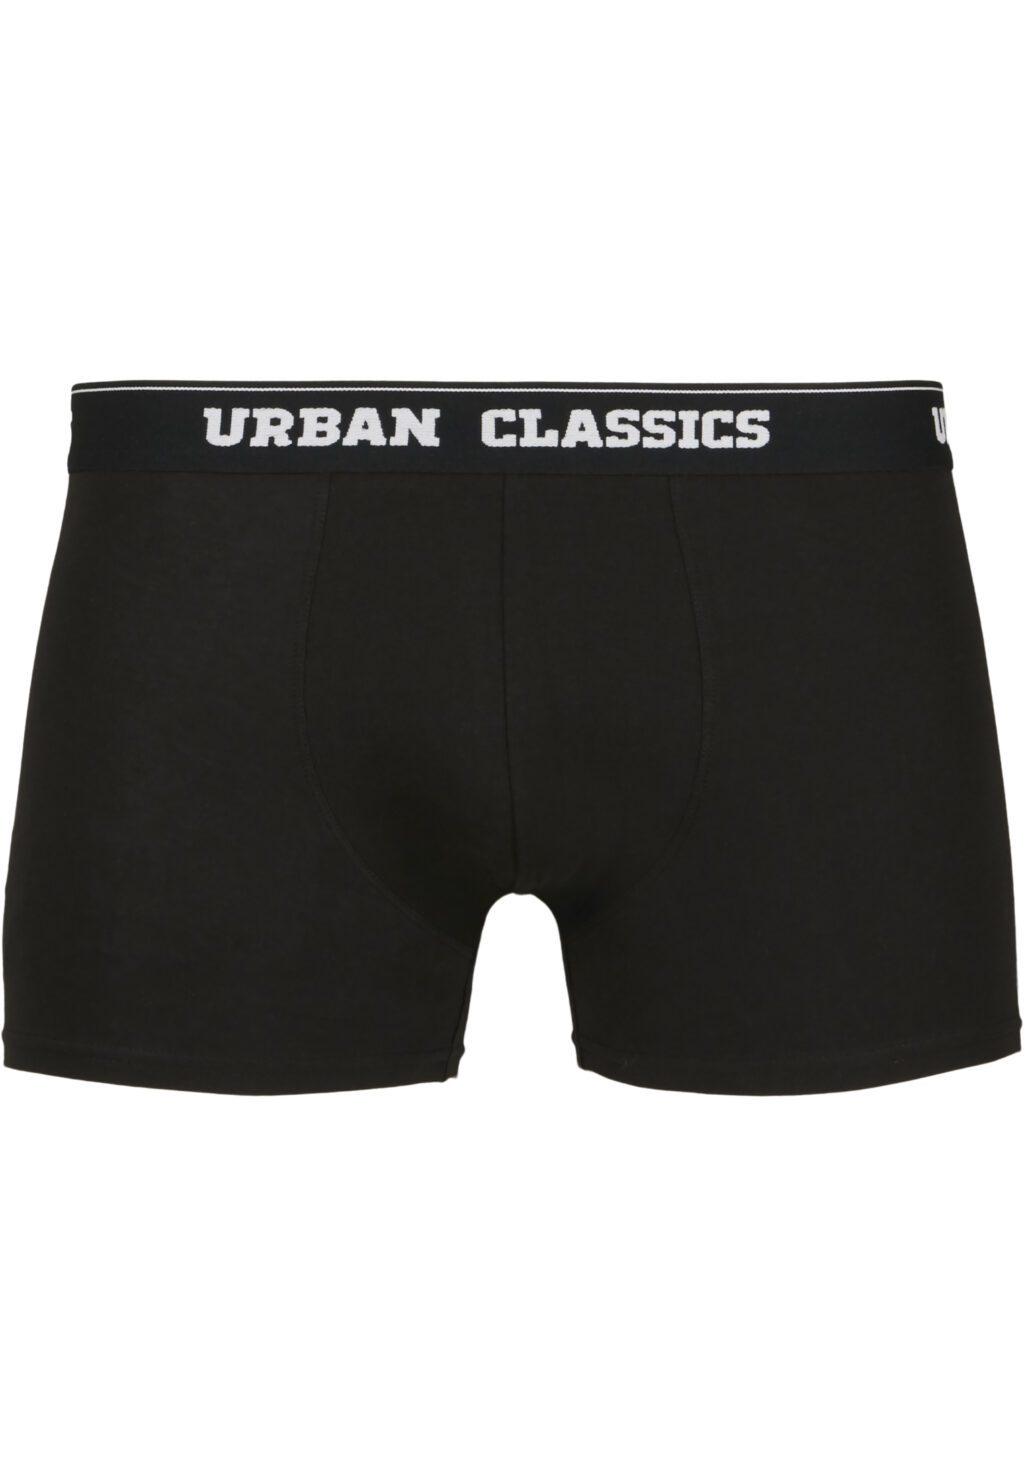 Urban Classics Boxer Shorts 5-Pack bur/dkblu+wht/blk+wht+aop+blk TB3845